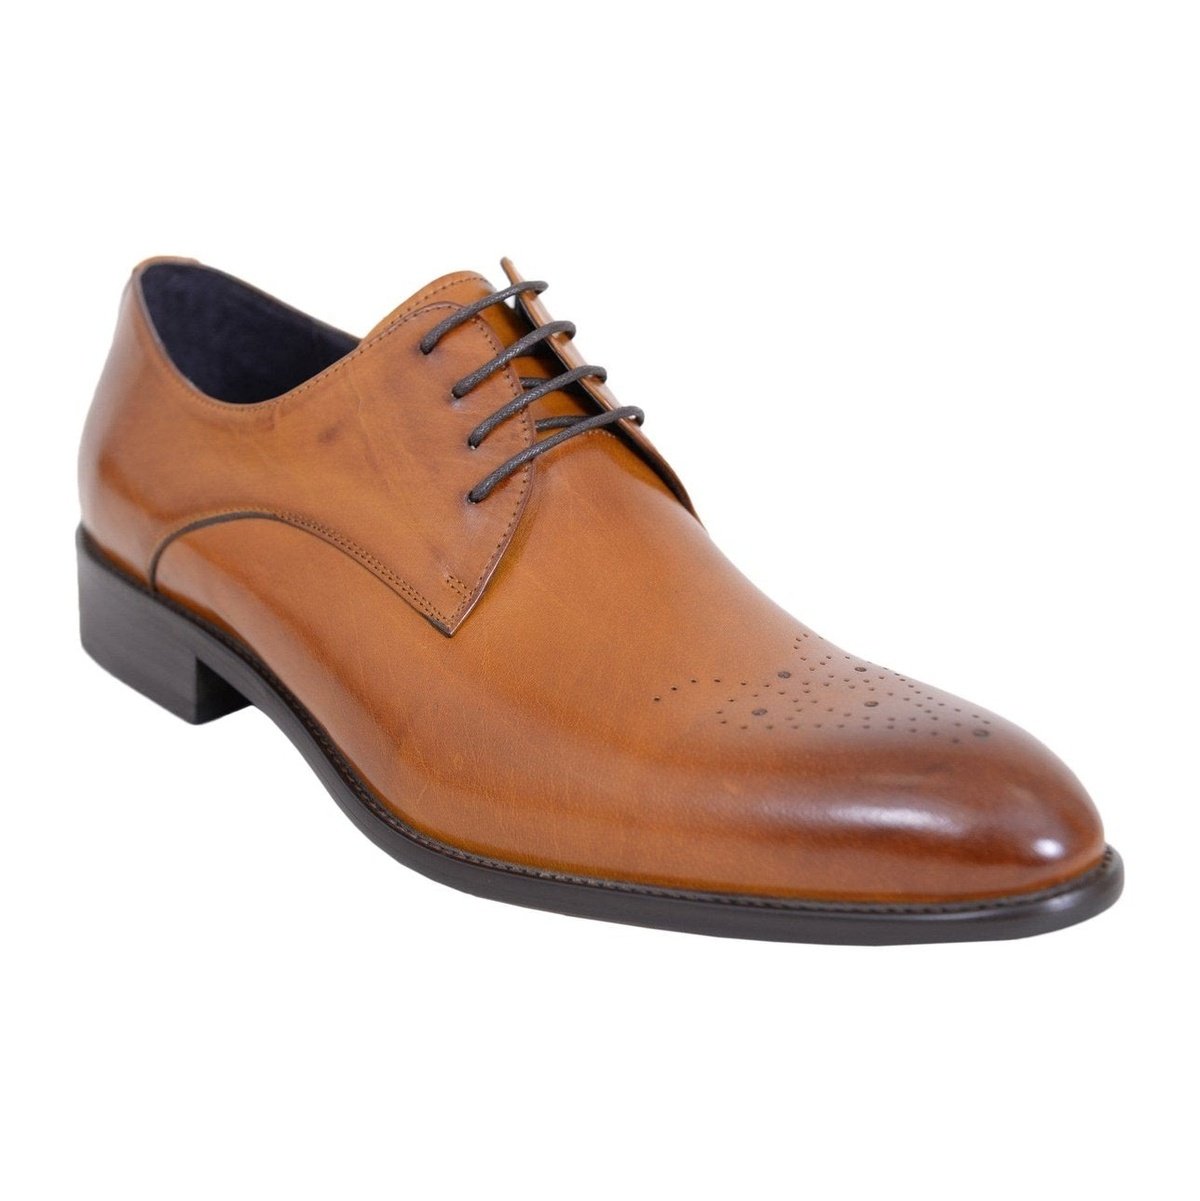 Carrucci Shoes For Amazon Carrucci Men's Genuine Leather Cognac Brown Lace Up Oxford Brogues Dress Shoes